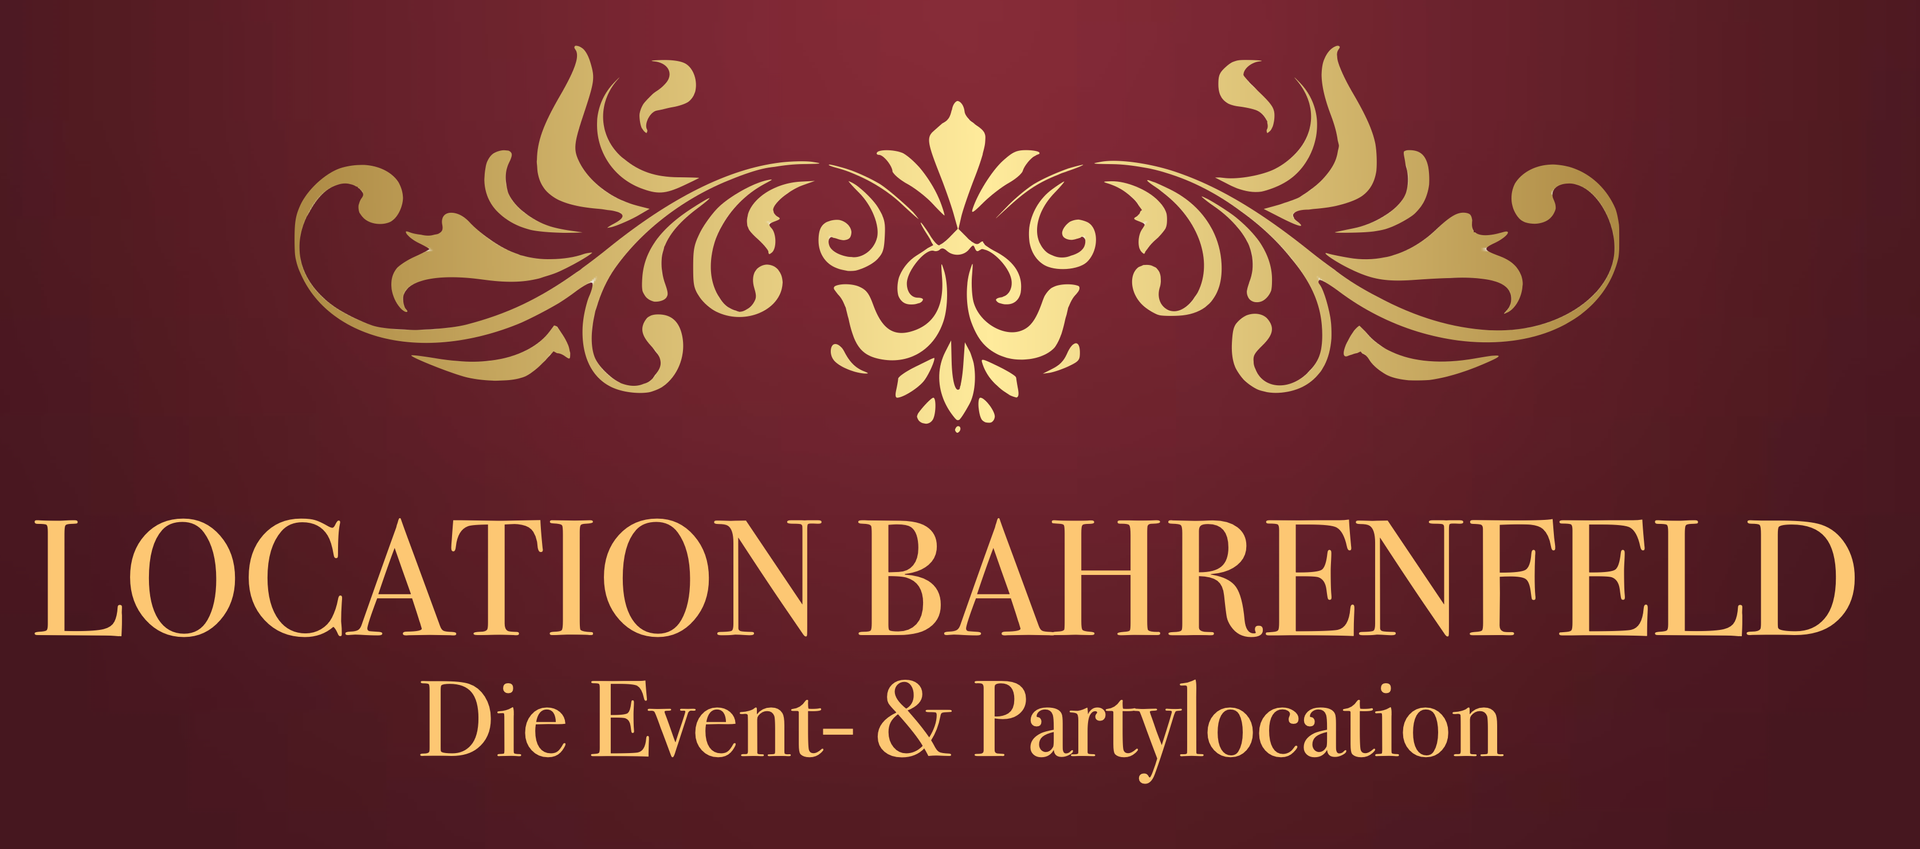 Location Bahrenfeld - Die Event- & Partlocation